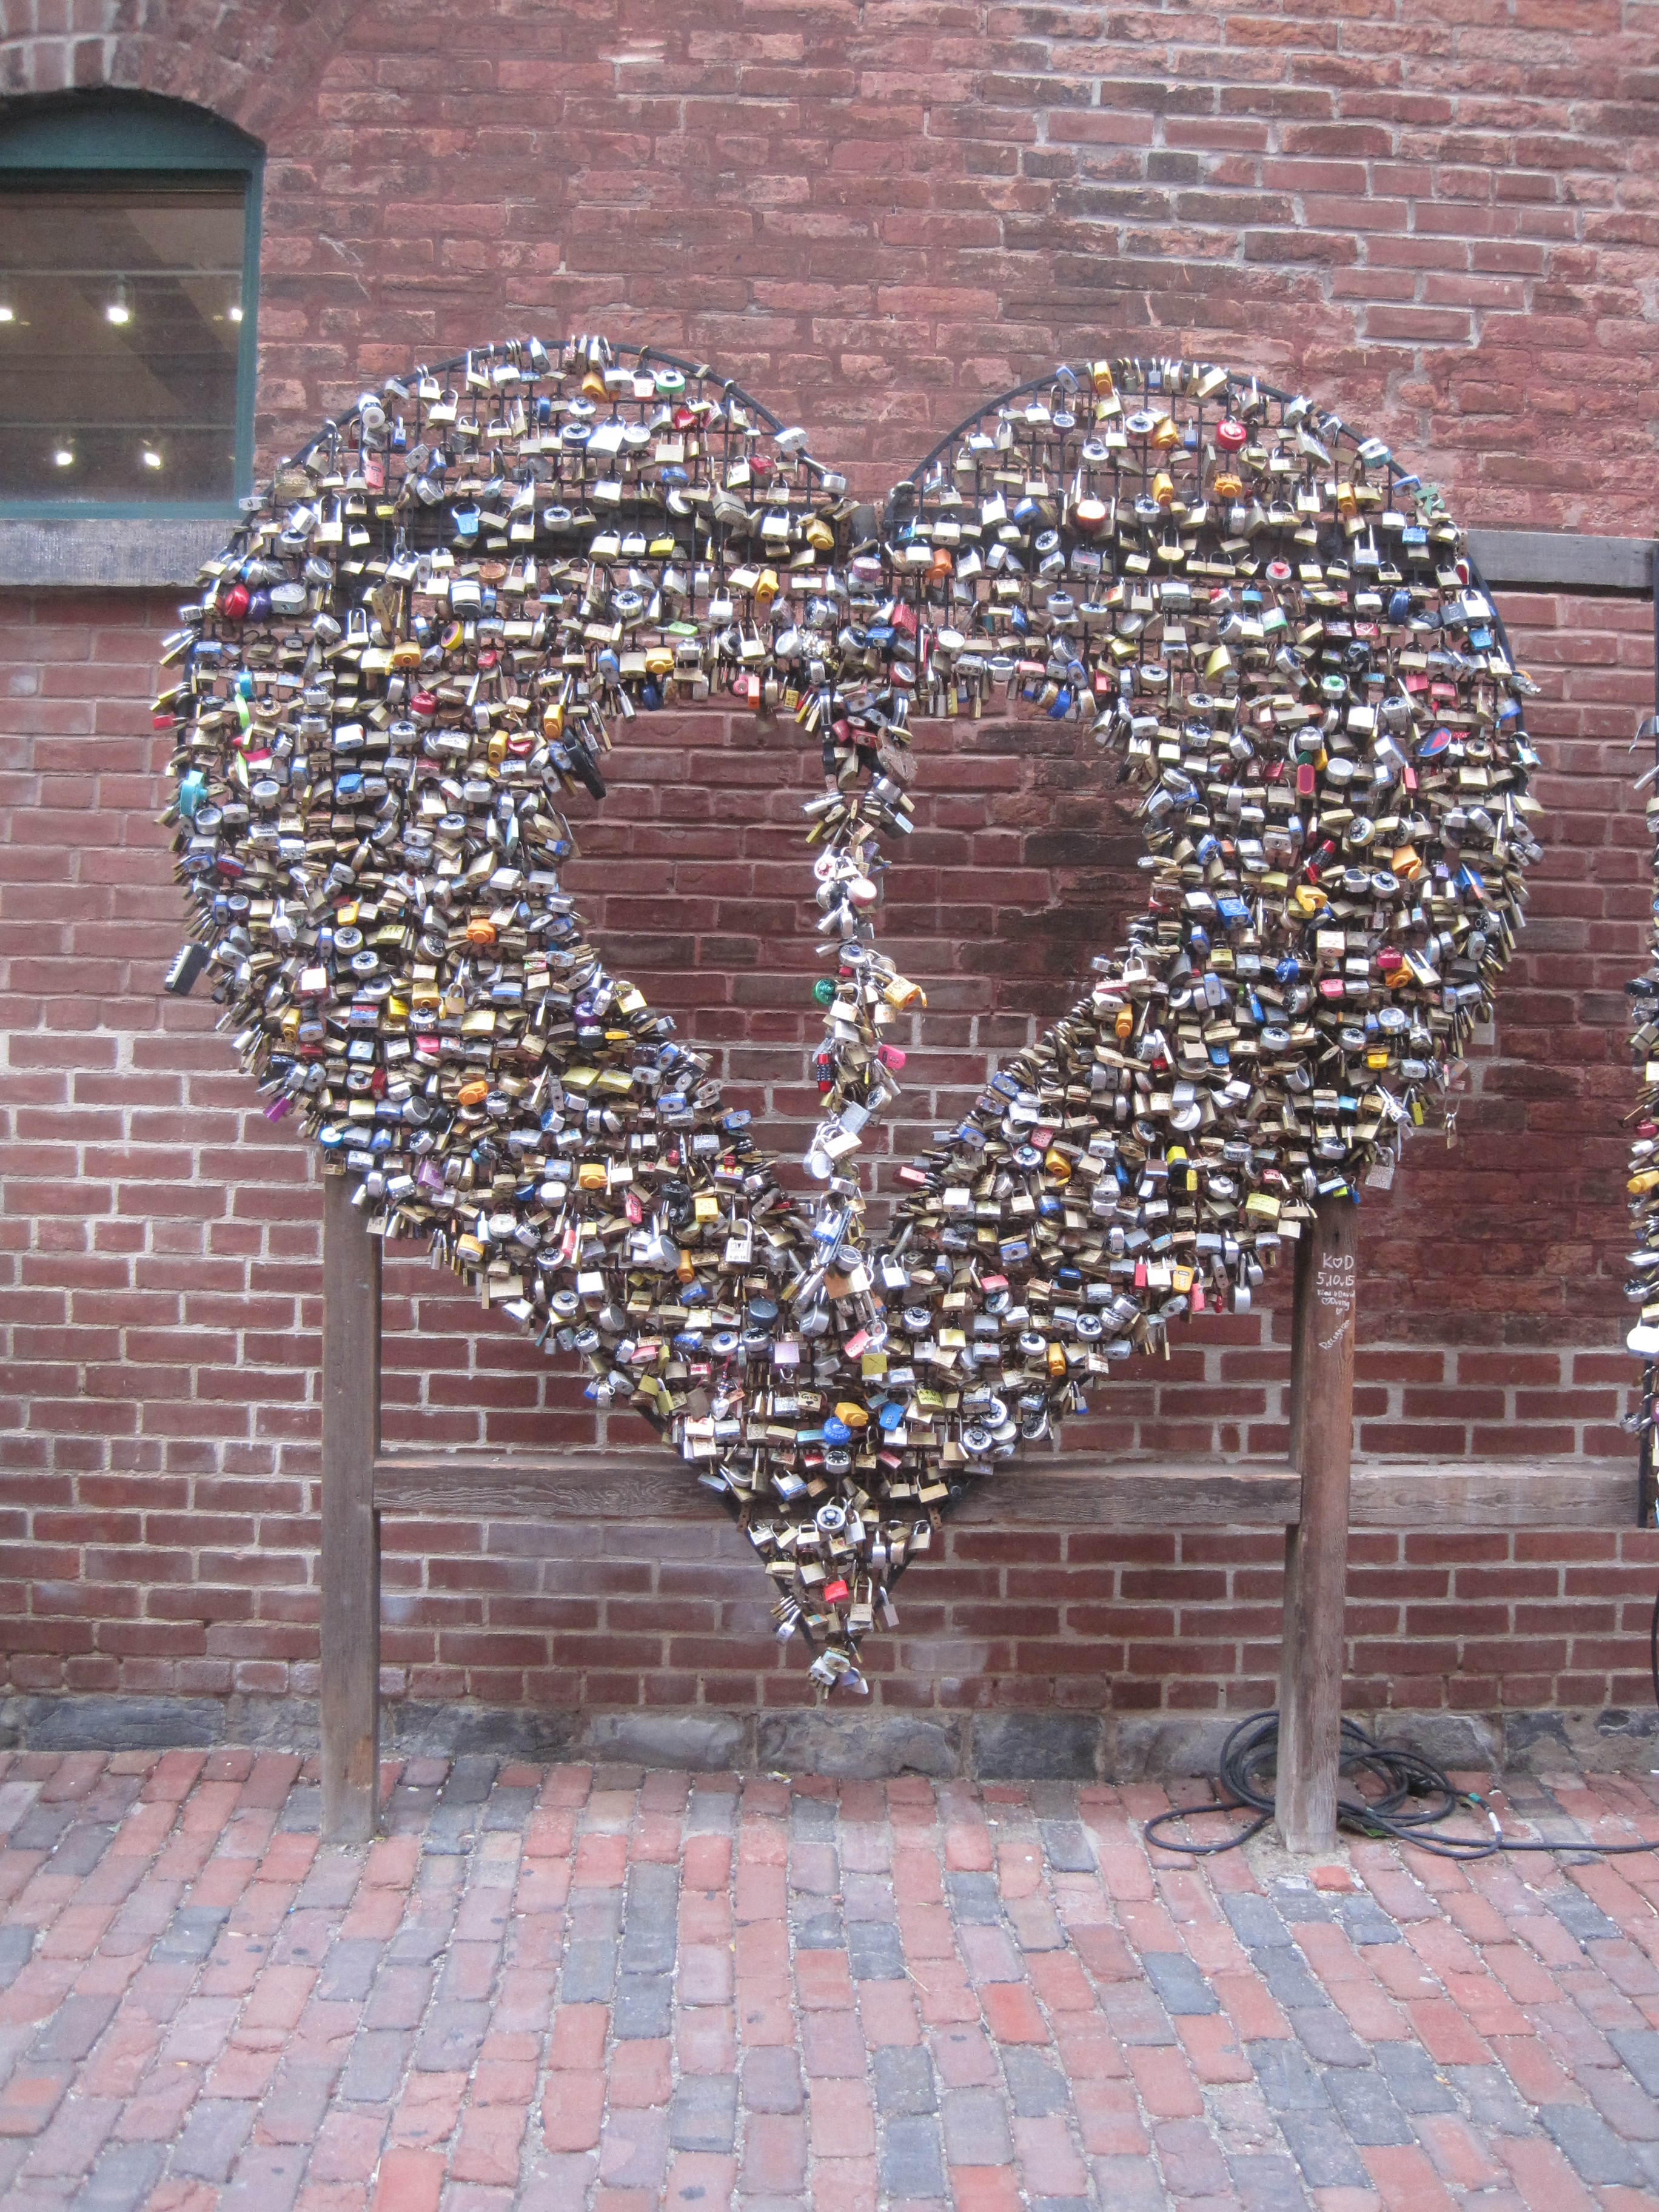 Heart of locks by Juliamaud